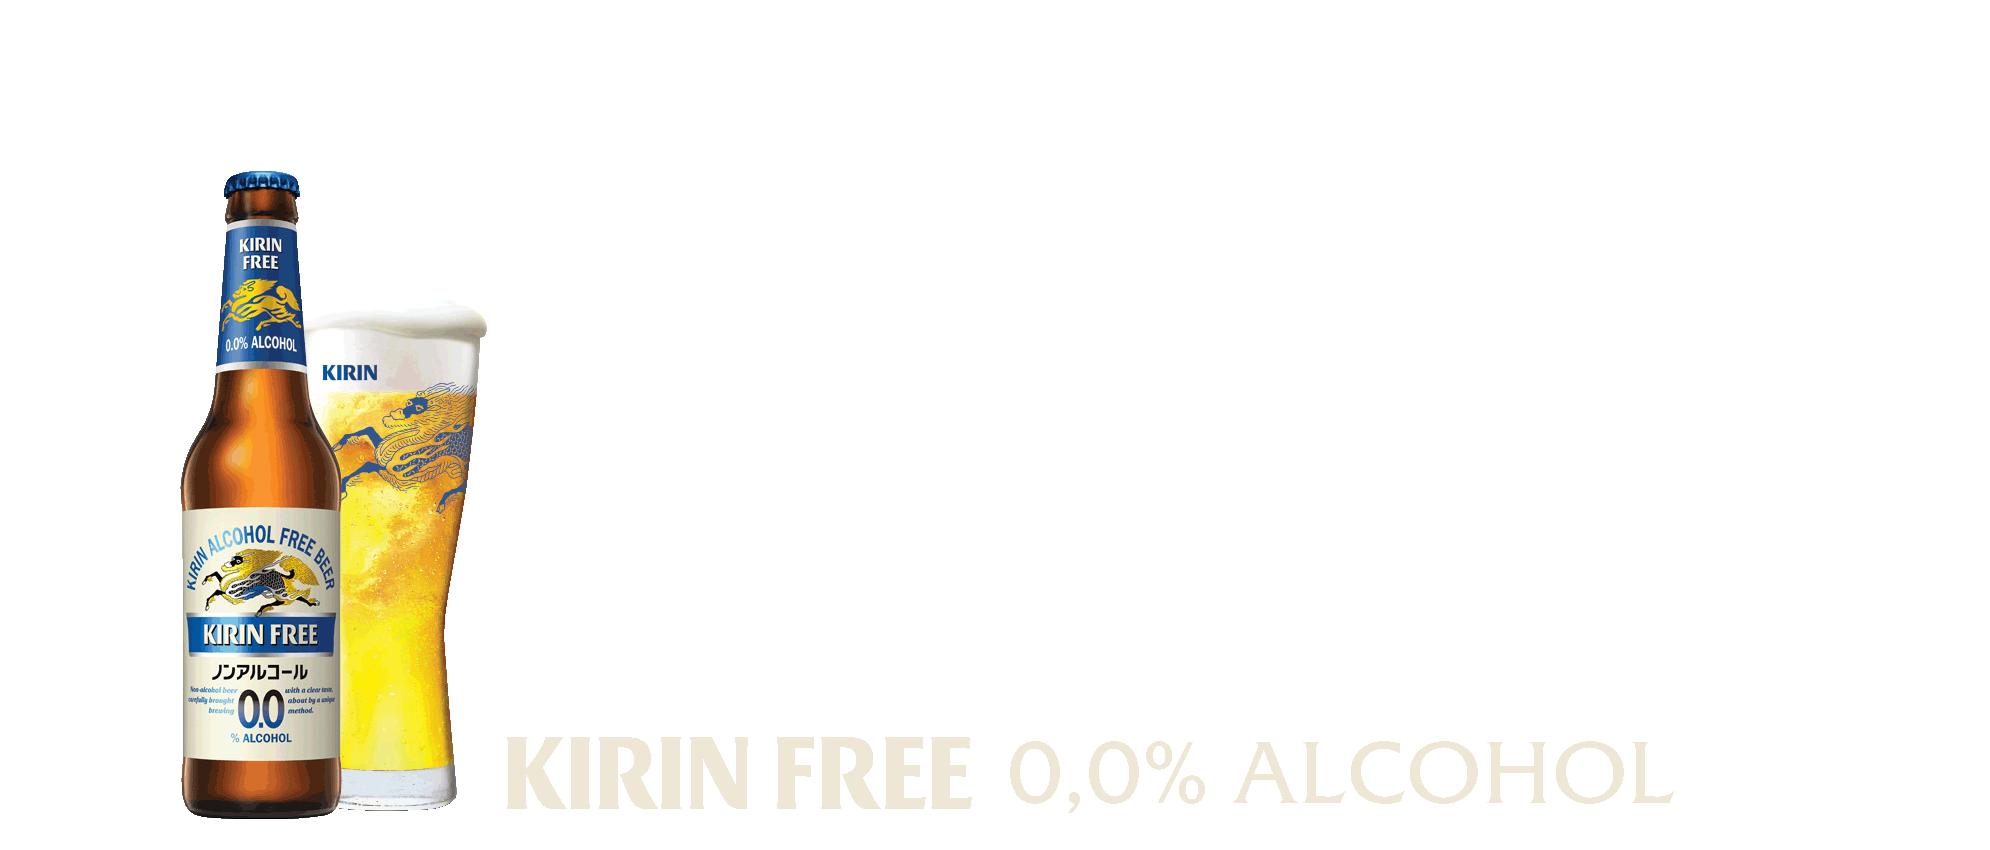 Kirin FREE 0.0% Alcohol